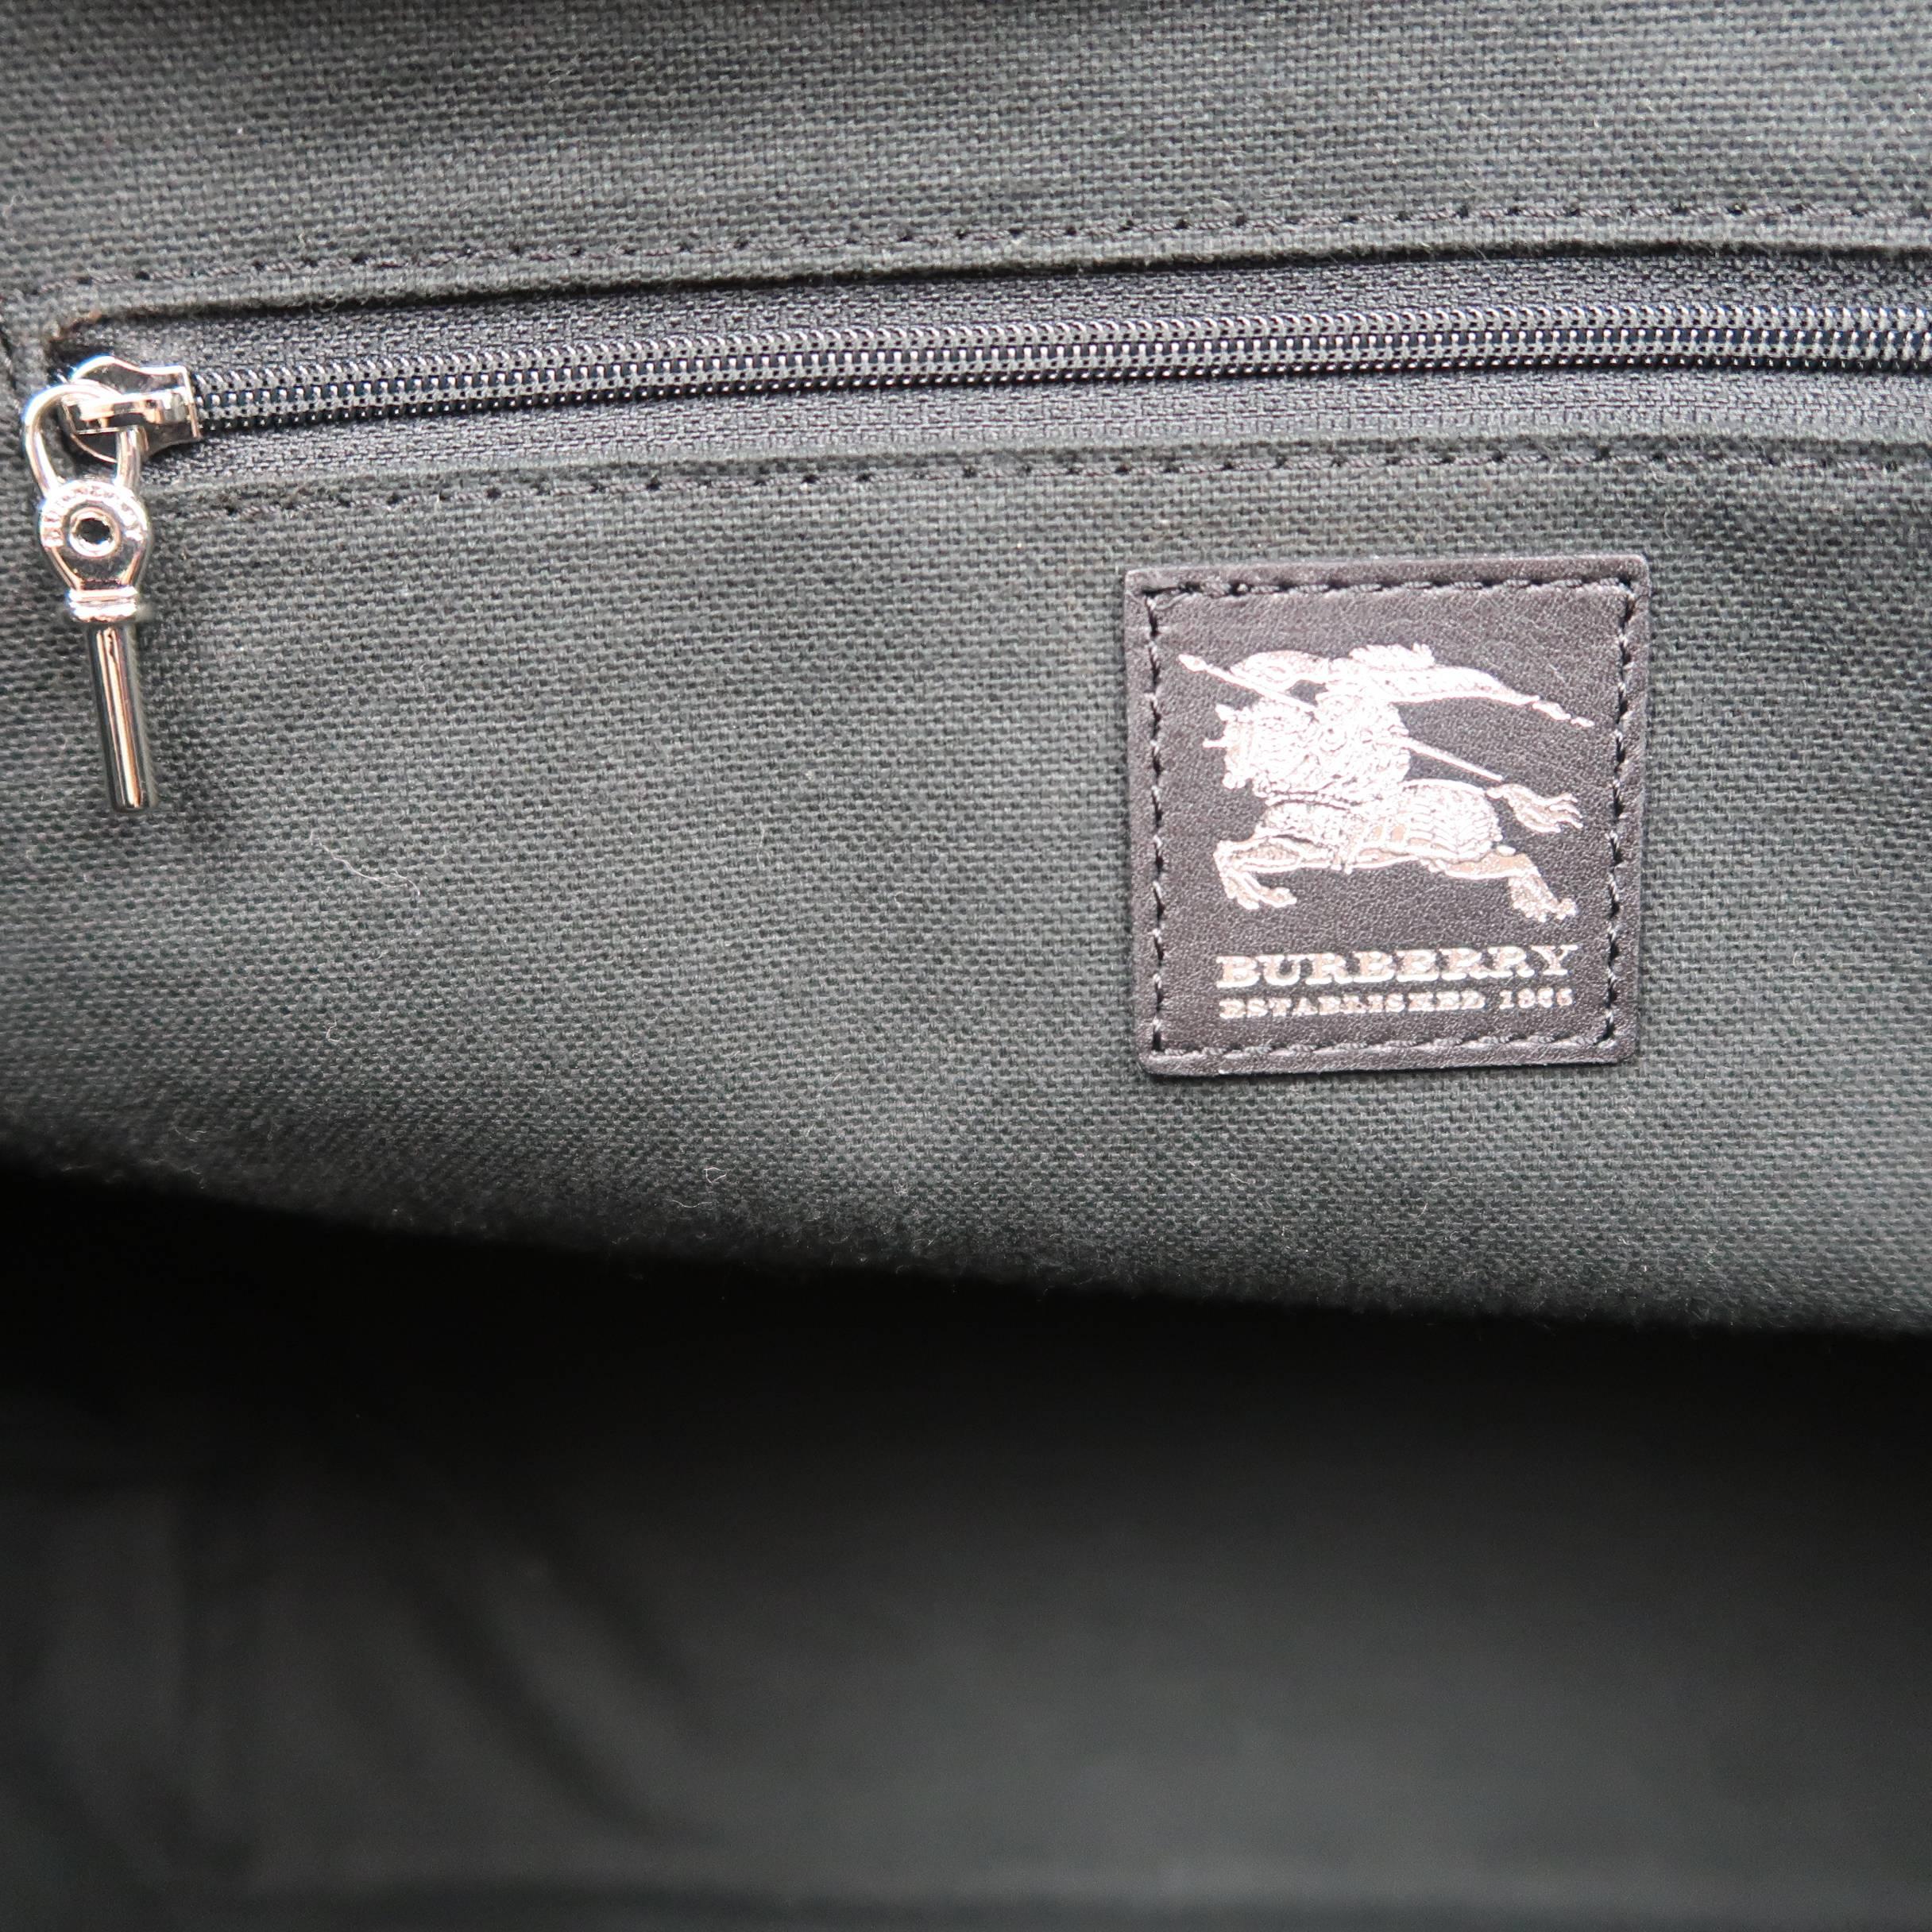 New BURBERRY Handbag - Beige Plaid Coated Canvas & Black Leather Bag Tote 1